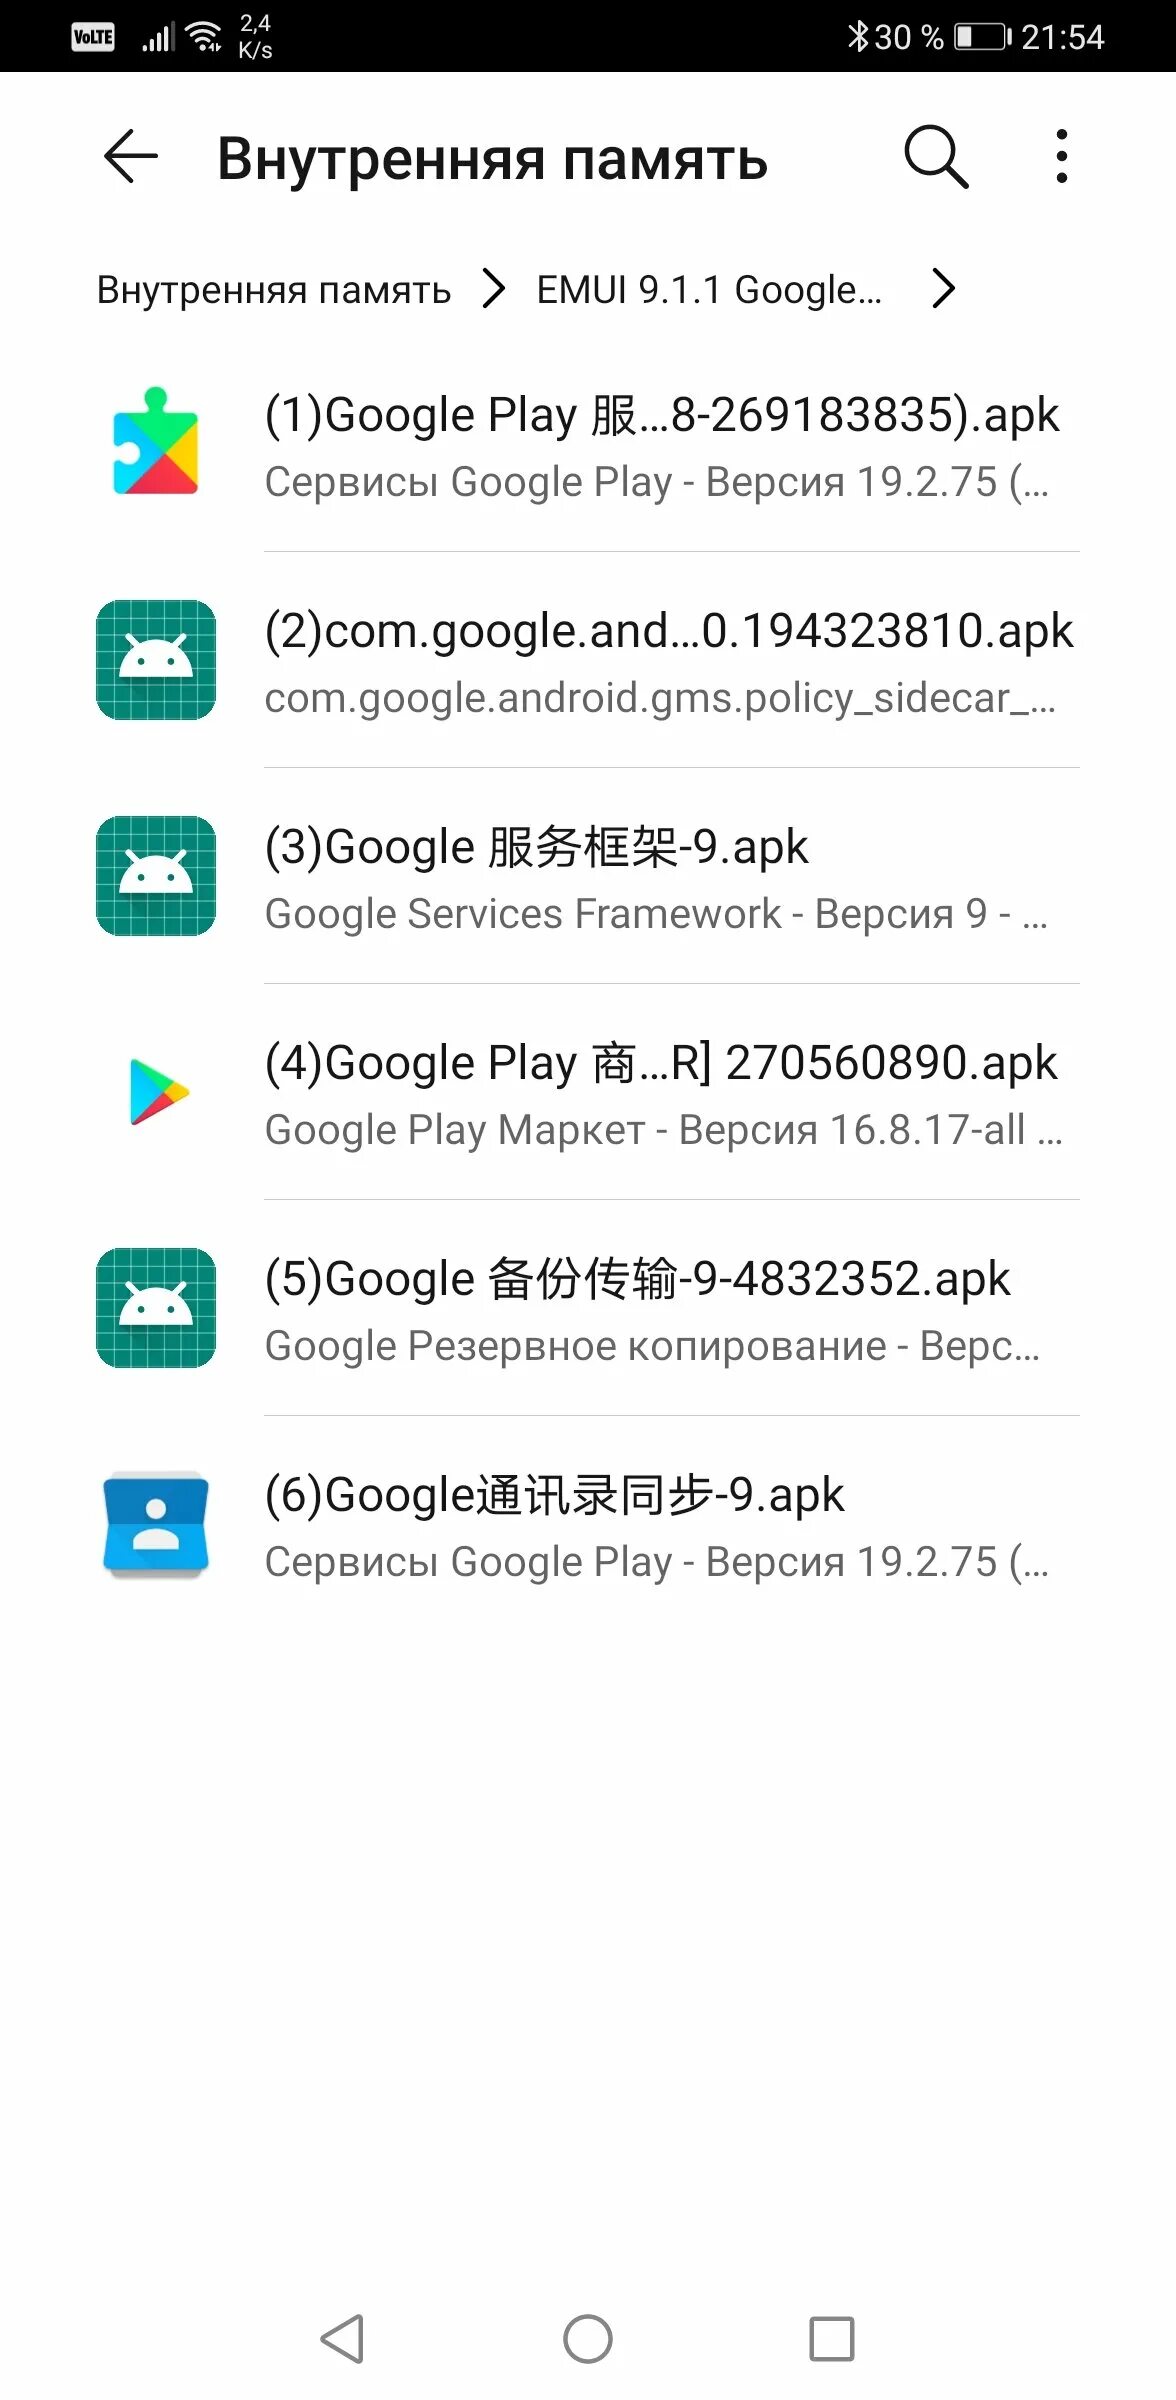 Сервисы Google Play. Гугл сервисы на Huawei. Установление сервисов гугл на Хуавей. Как на Хуавей установить Google Play.